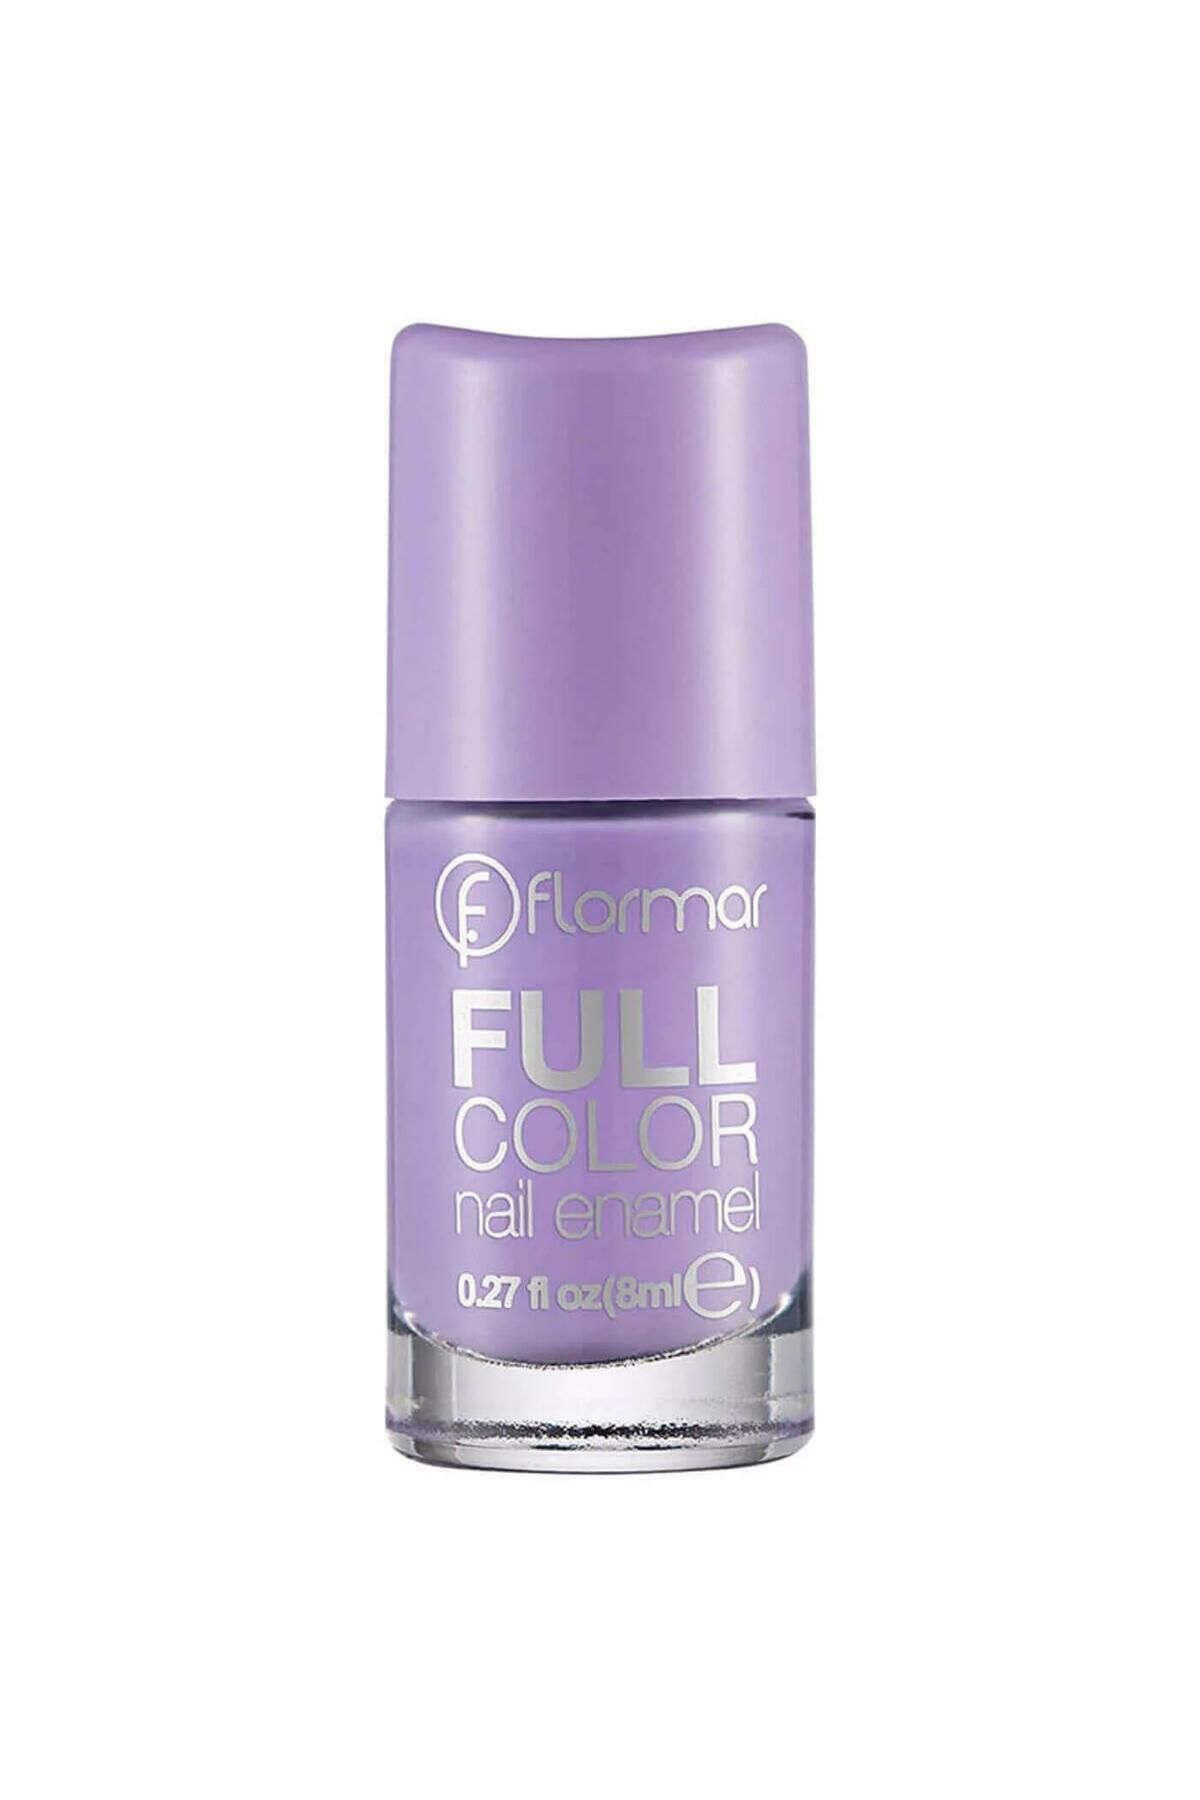 Flormar Full Color Nail Enamel Fc14 Lavender Relaxation